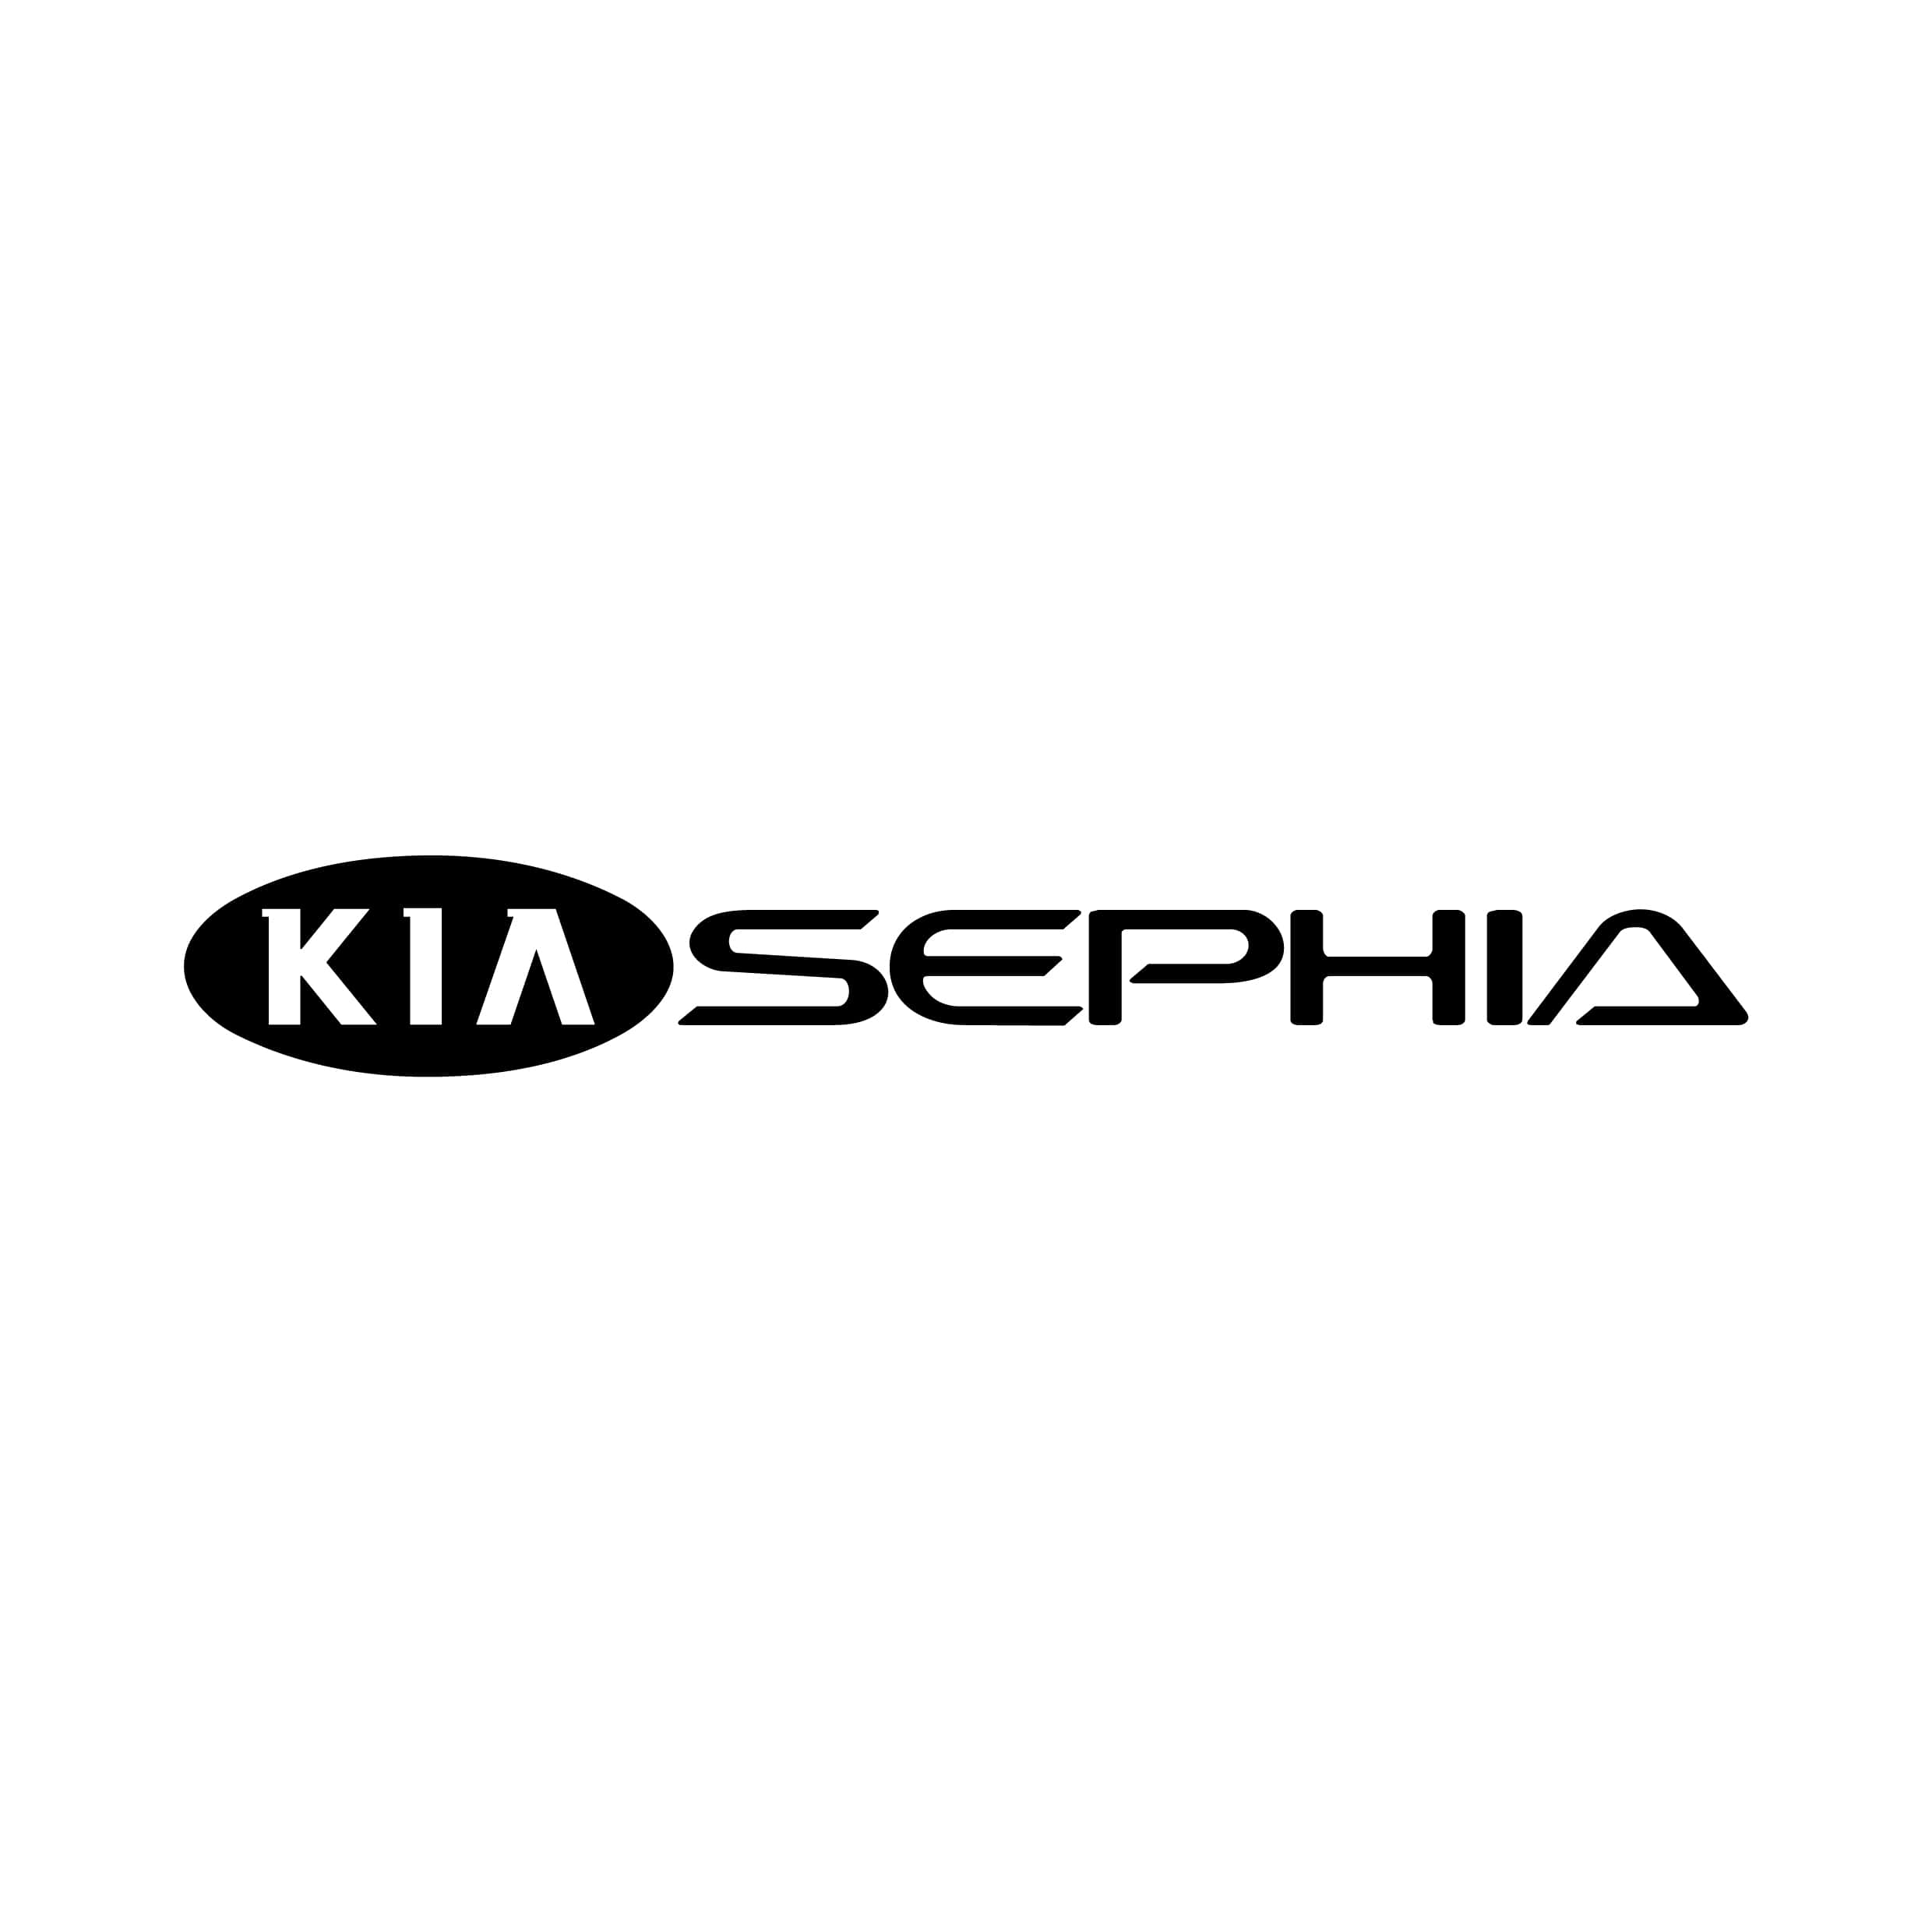 stickers-kia-sephia-ref18-autocollant-voiture-sticker-auto-autocollants-decals-sponsors-racing-tuning-sport-logo-min